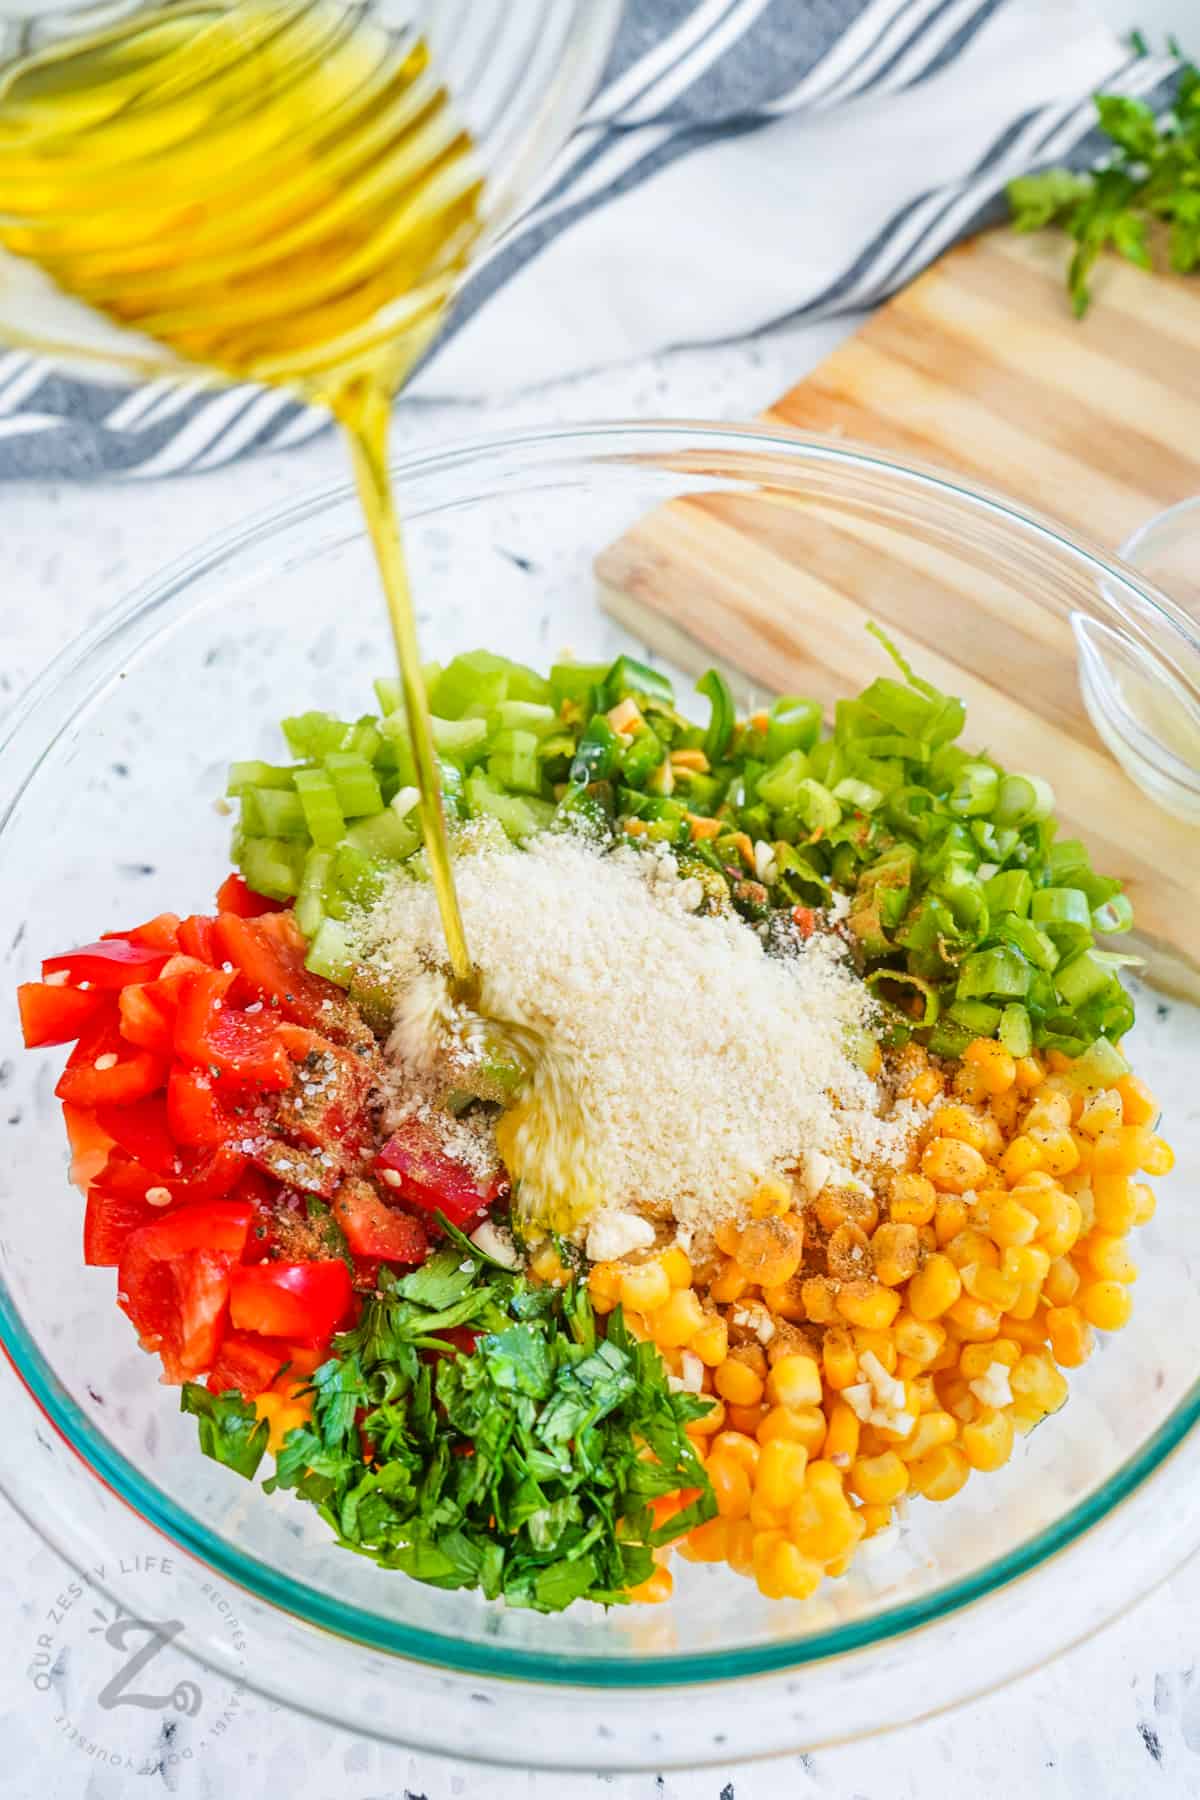 adding dressing to Corn Salad ingredients